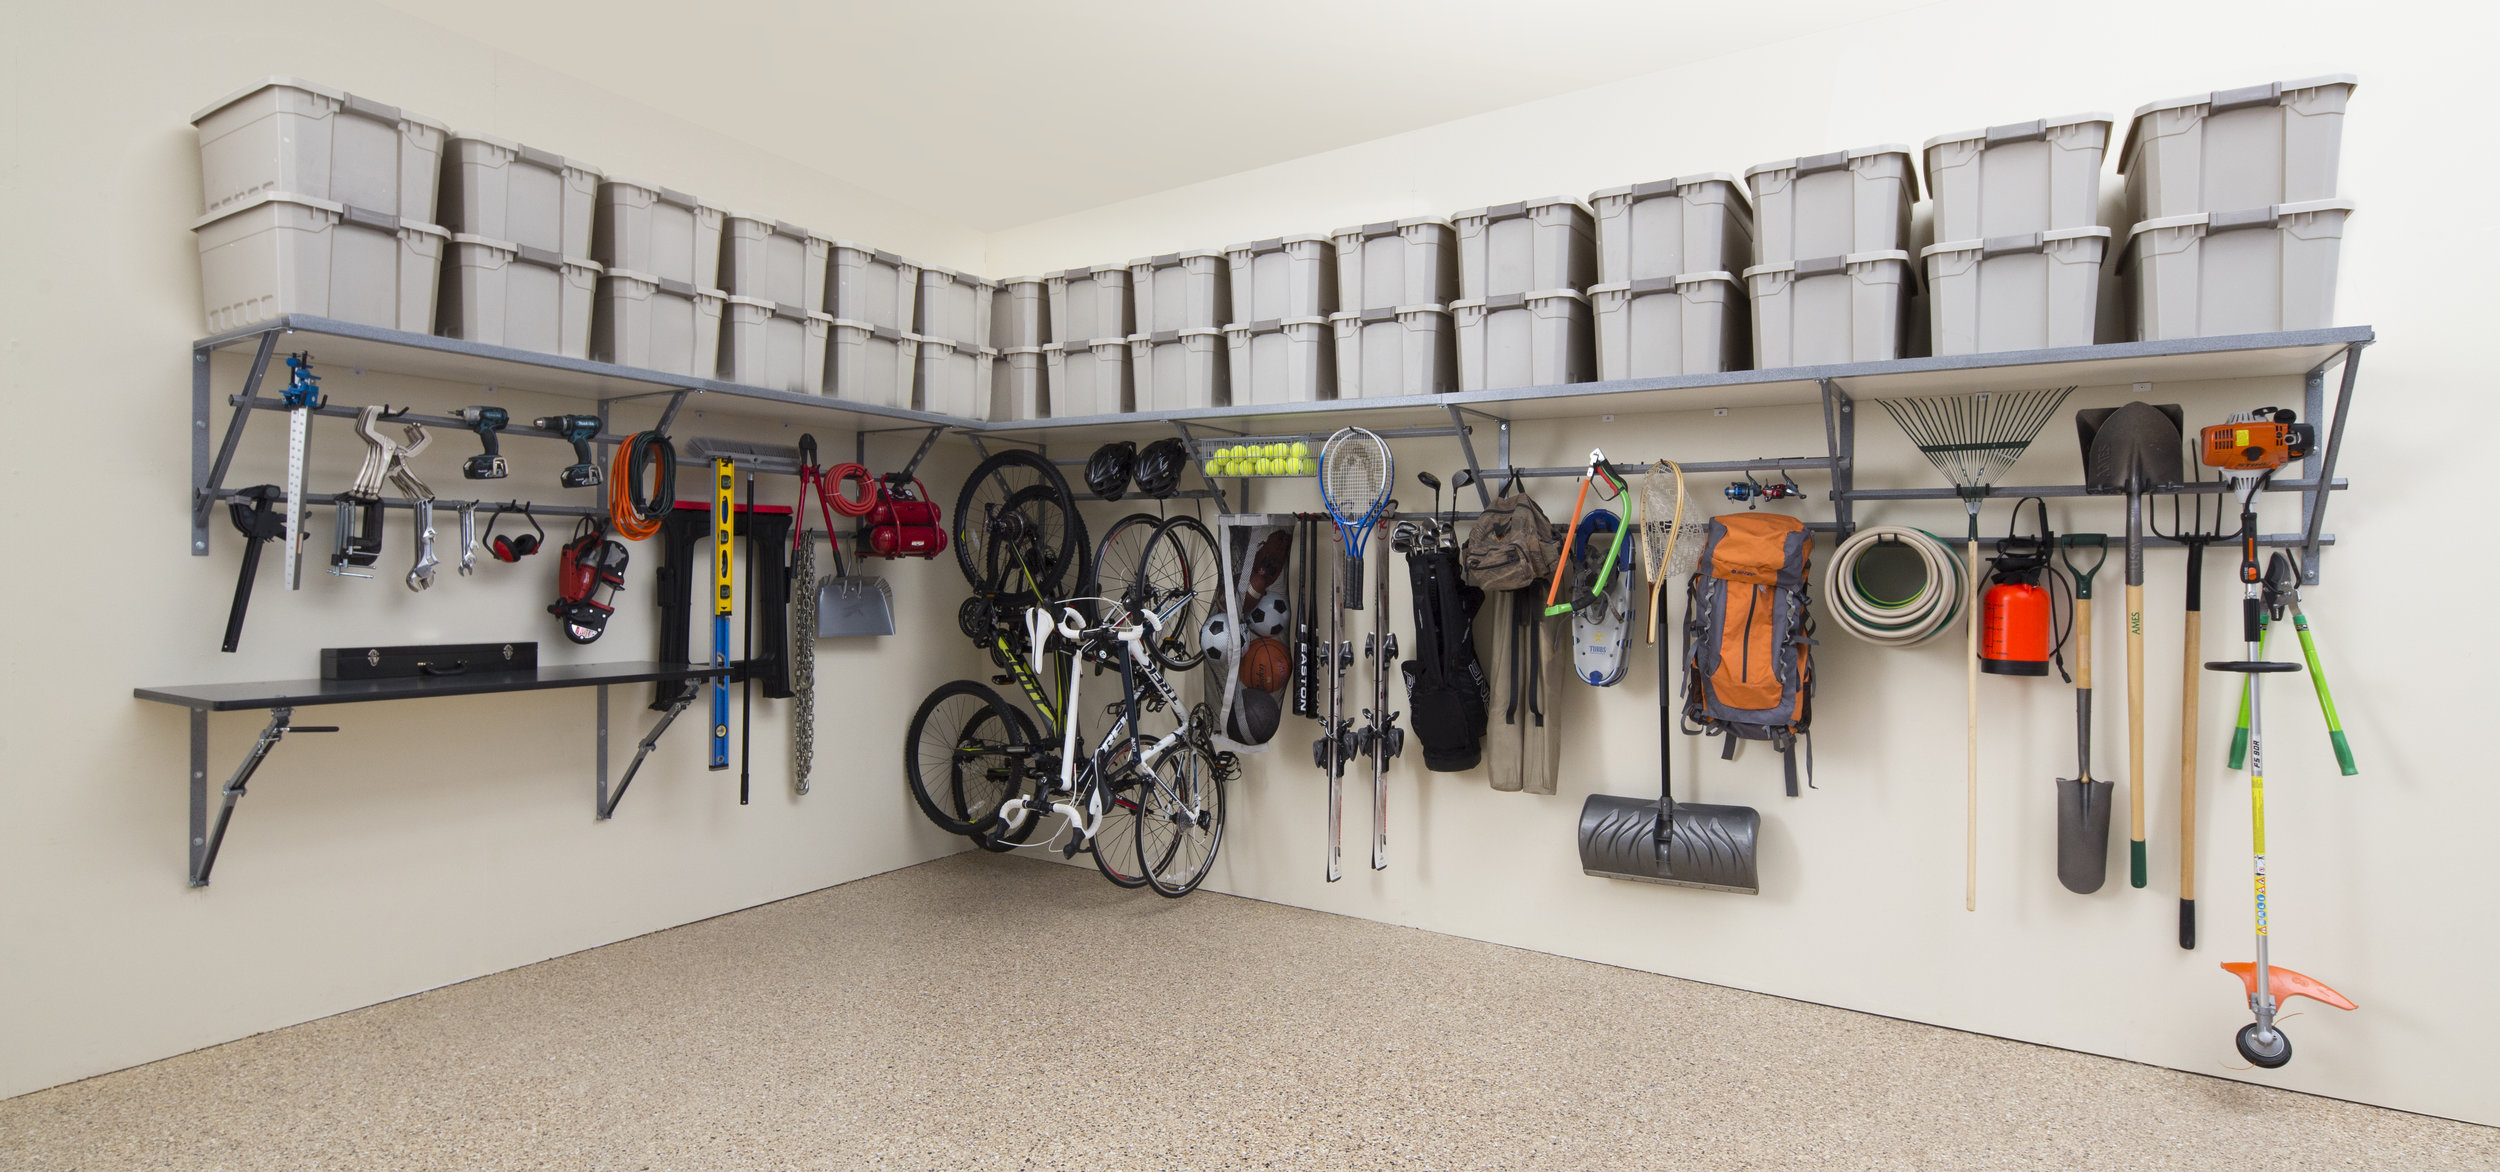 NEAT Garage Storage Systems and Flooring — NEAT Garage Shelves